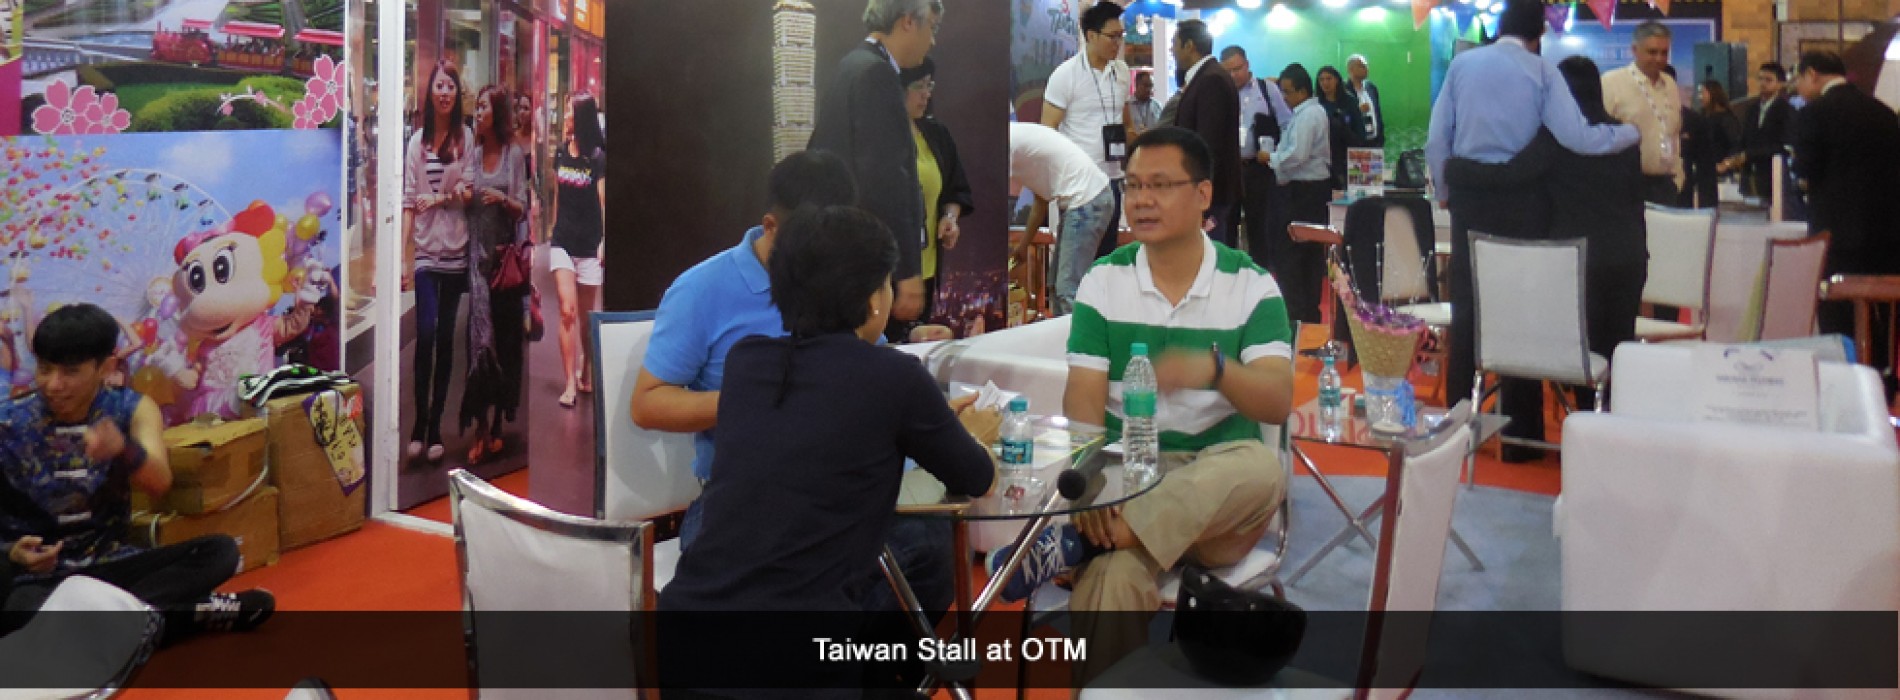 Taiwan Tourism Bureau participates in OTM 2017 and holds Workshops in Mumbai and Bengaluru